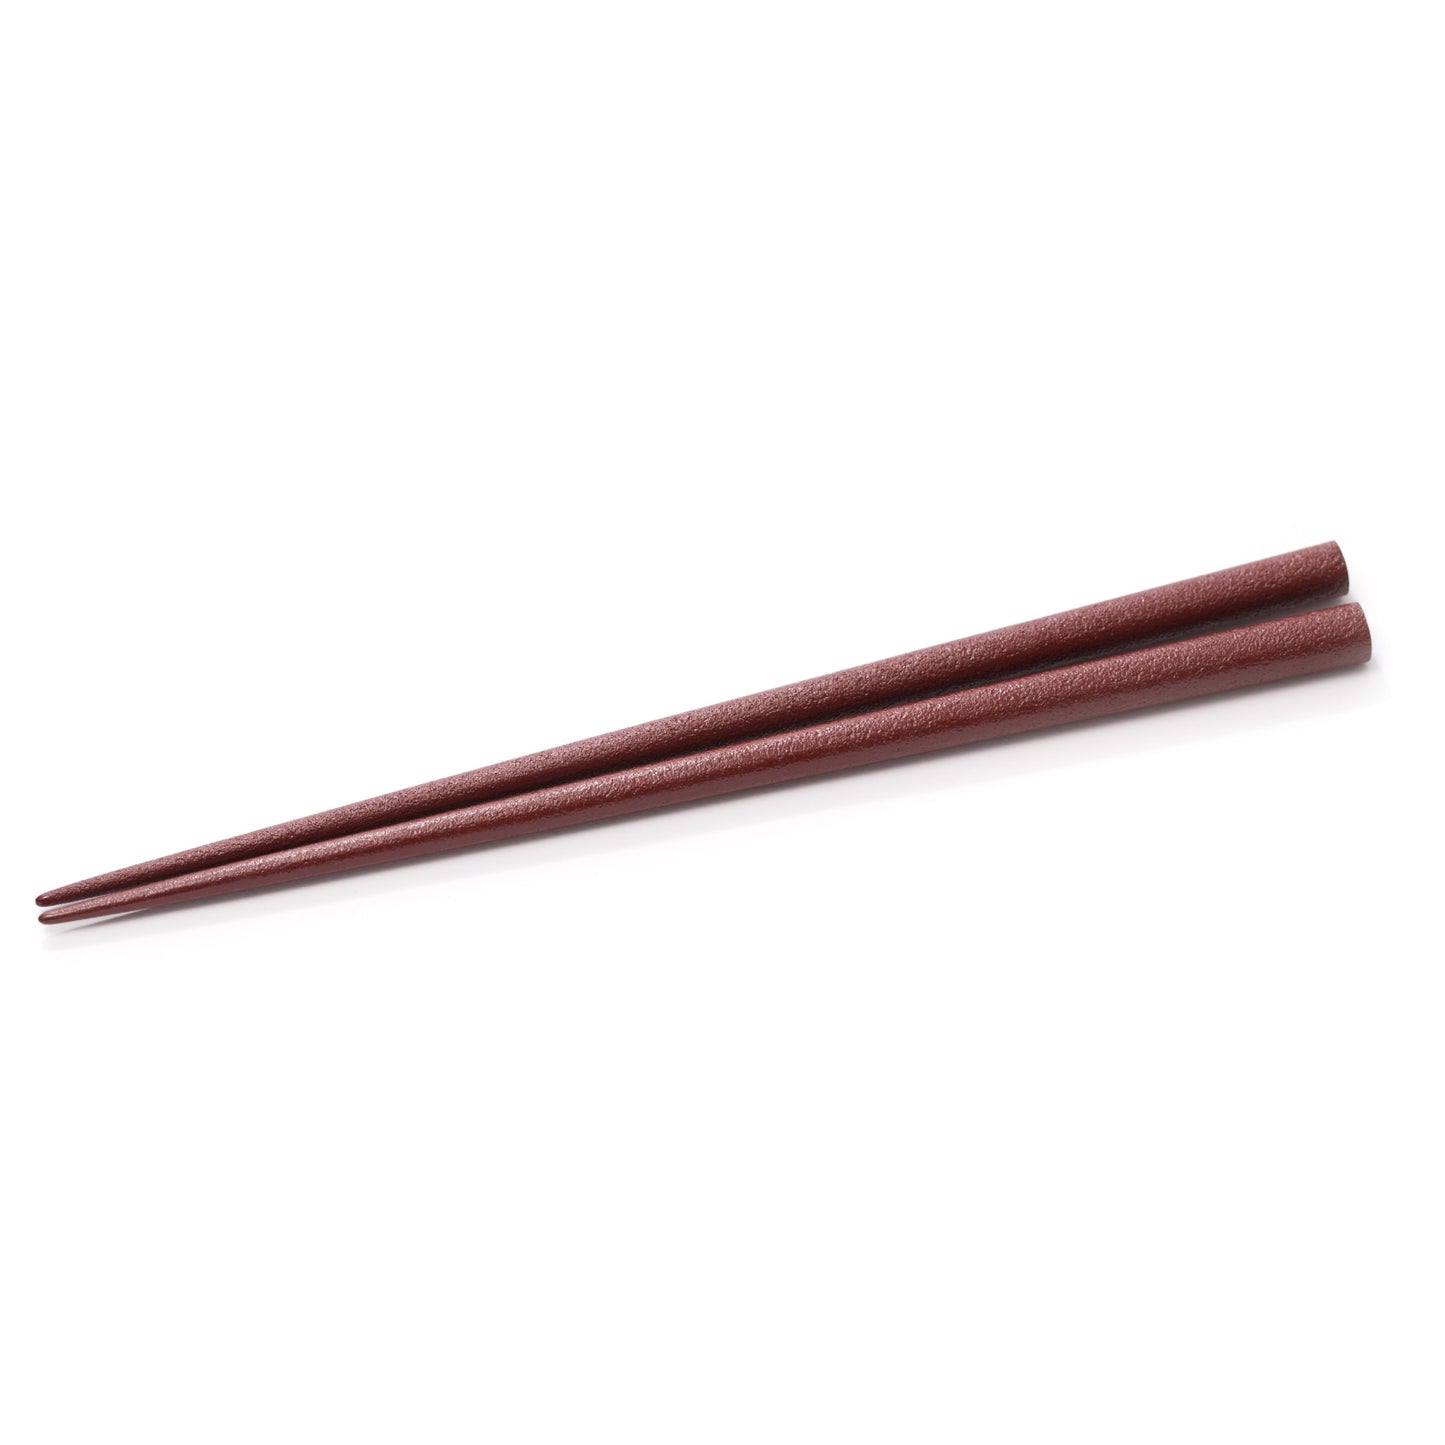 Kanshitsu chopsticks set